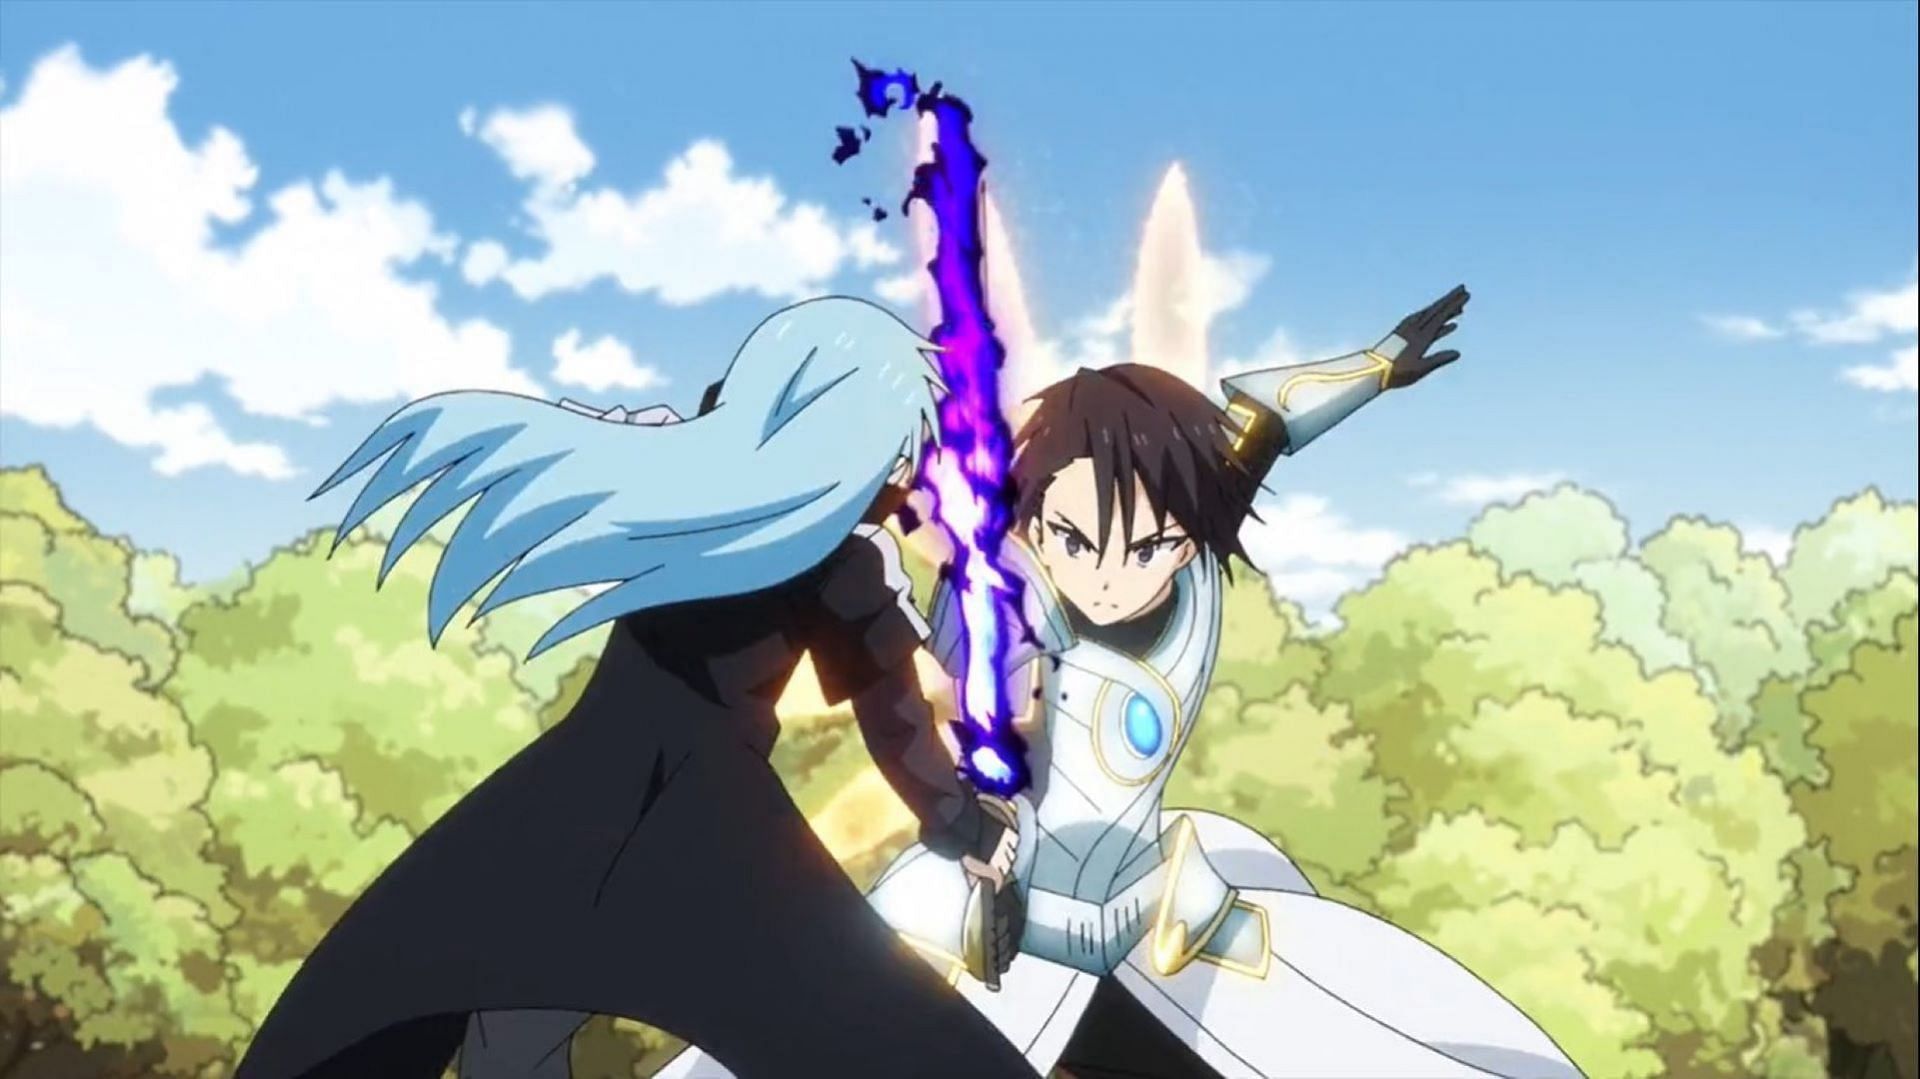 Rimuru vs. Hinata in the episode (Image via 8Bit)